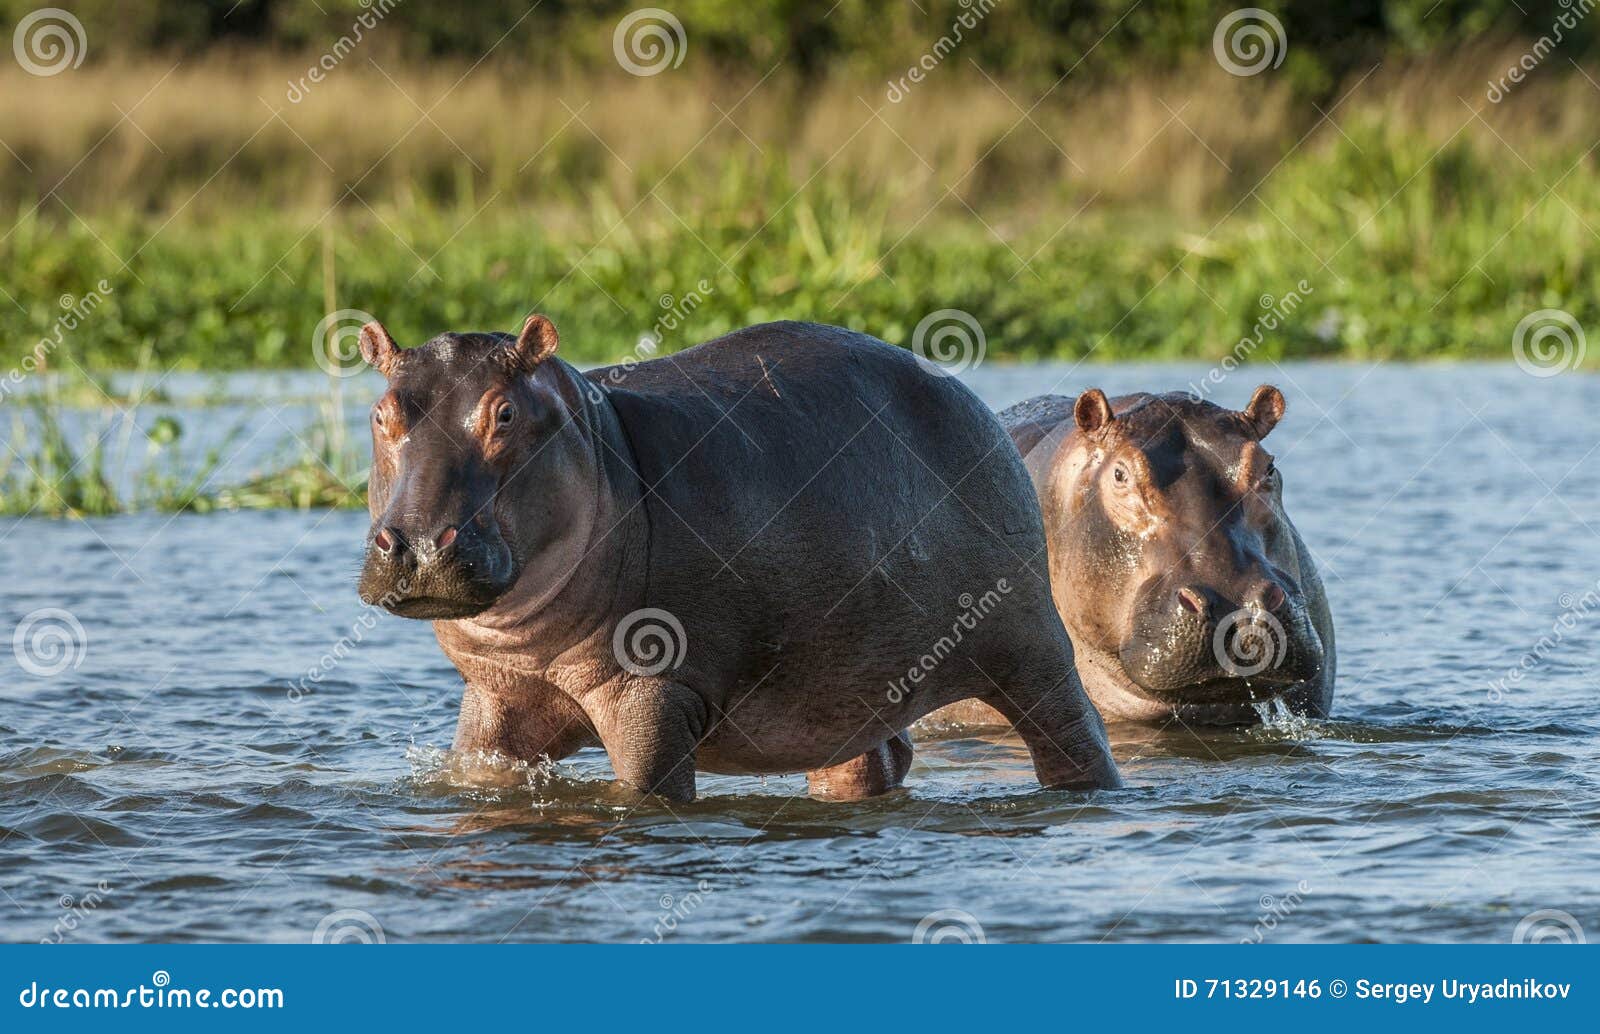 hippopotamus in the water. the common hippopotamus (hippopotamus amphibius)